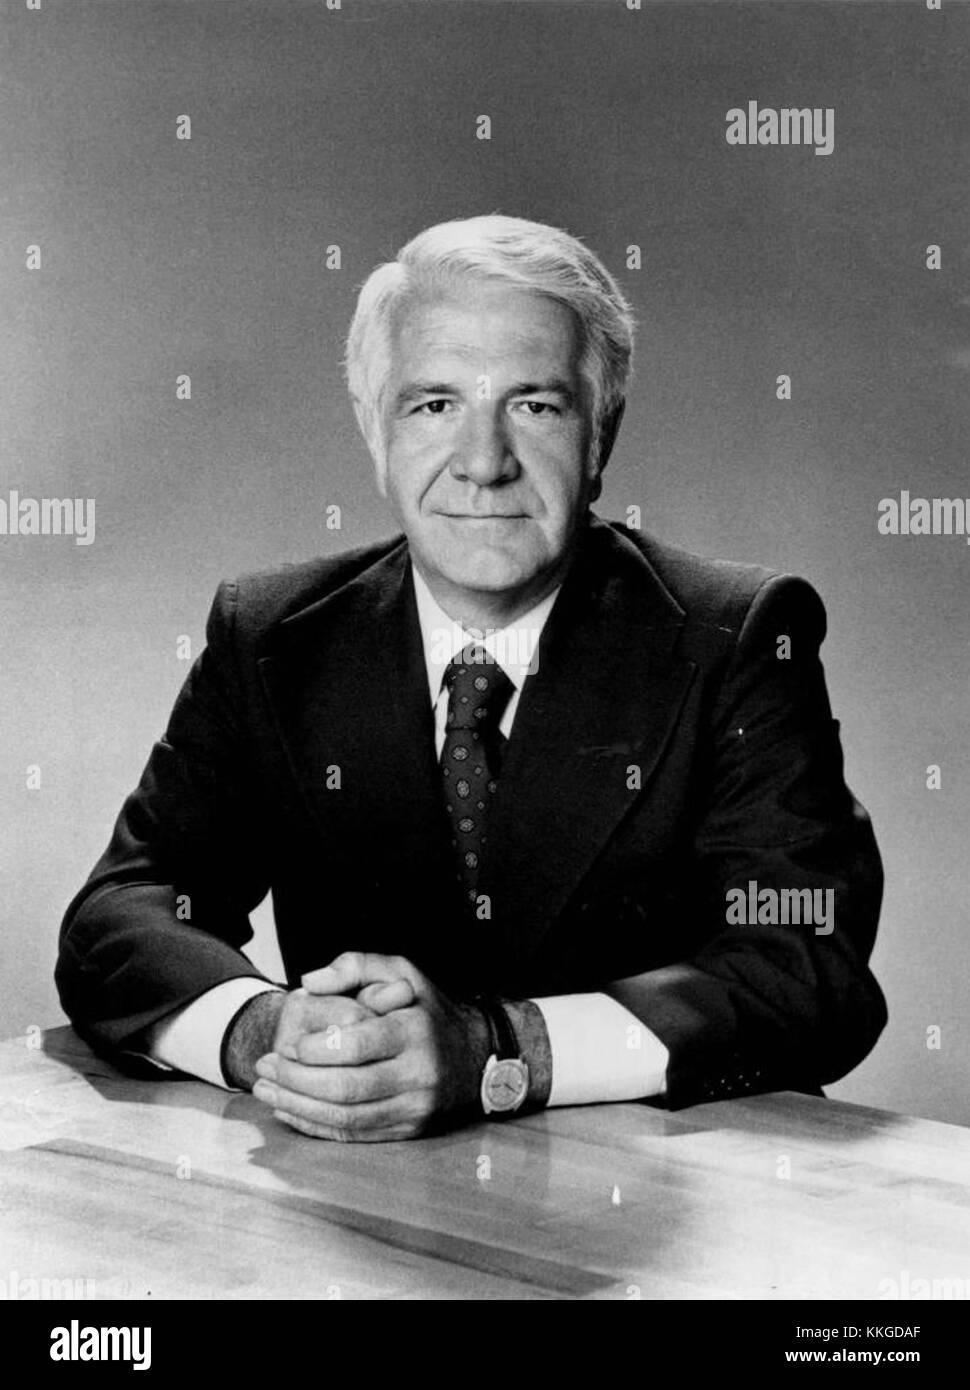 1976 - Harry Reasoner - Newsman Television Press Photo Stock Photo